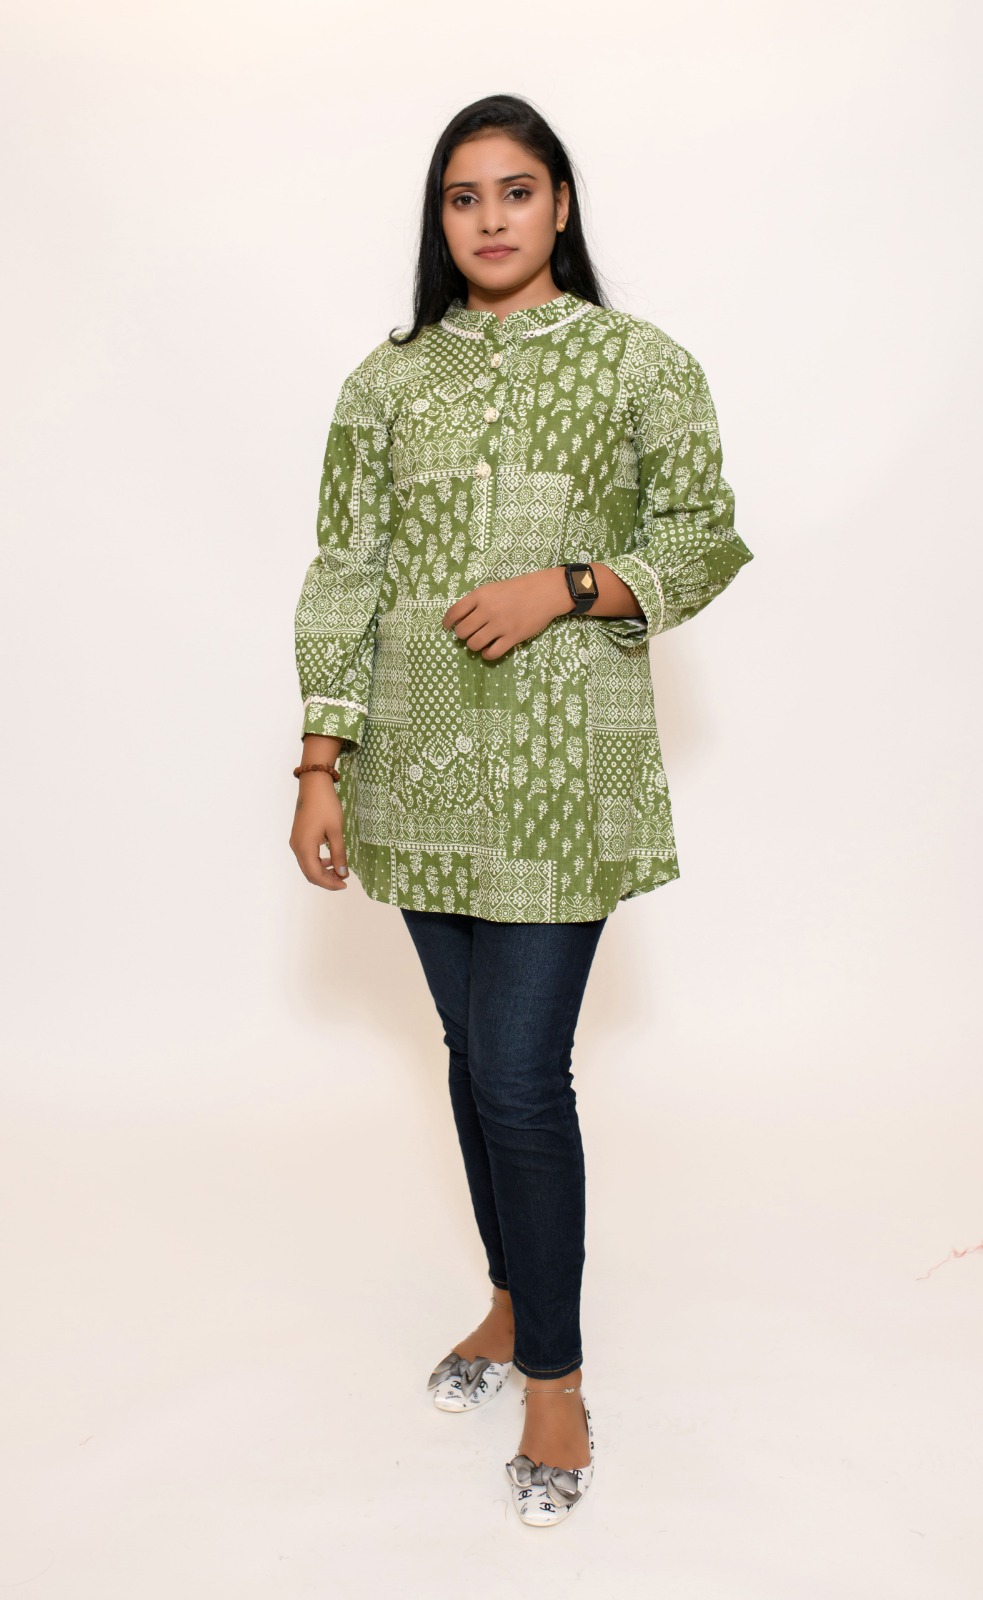 Cotton Designer Stand Collar Kurti, Size: S, M & L at Rs 560 in Jaipur